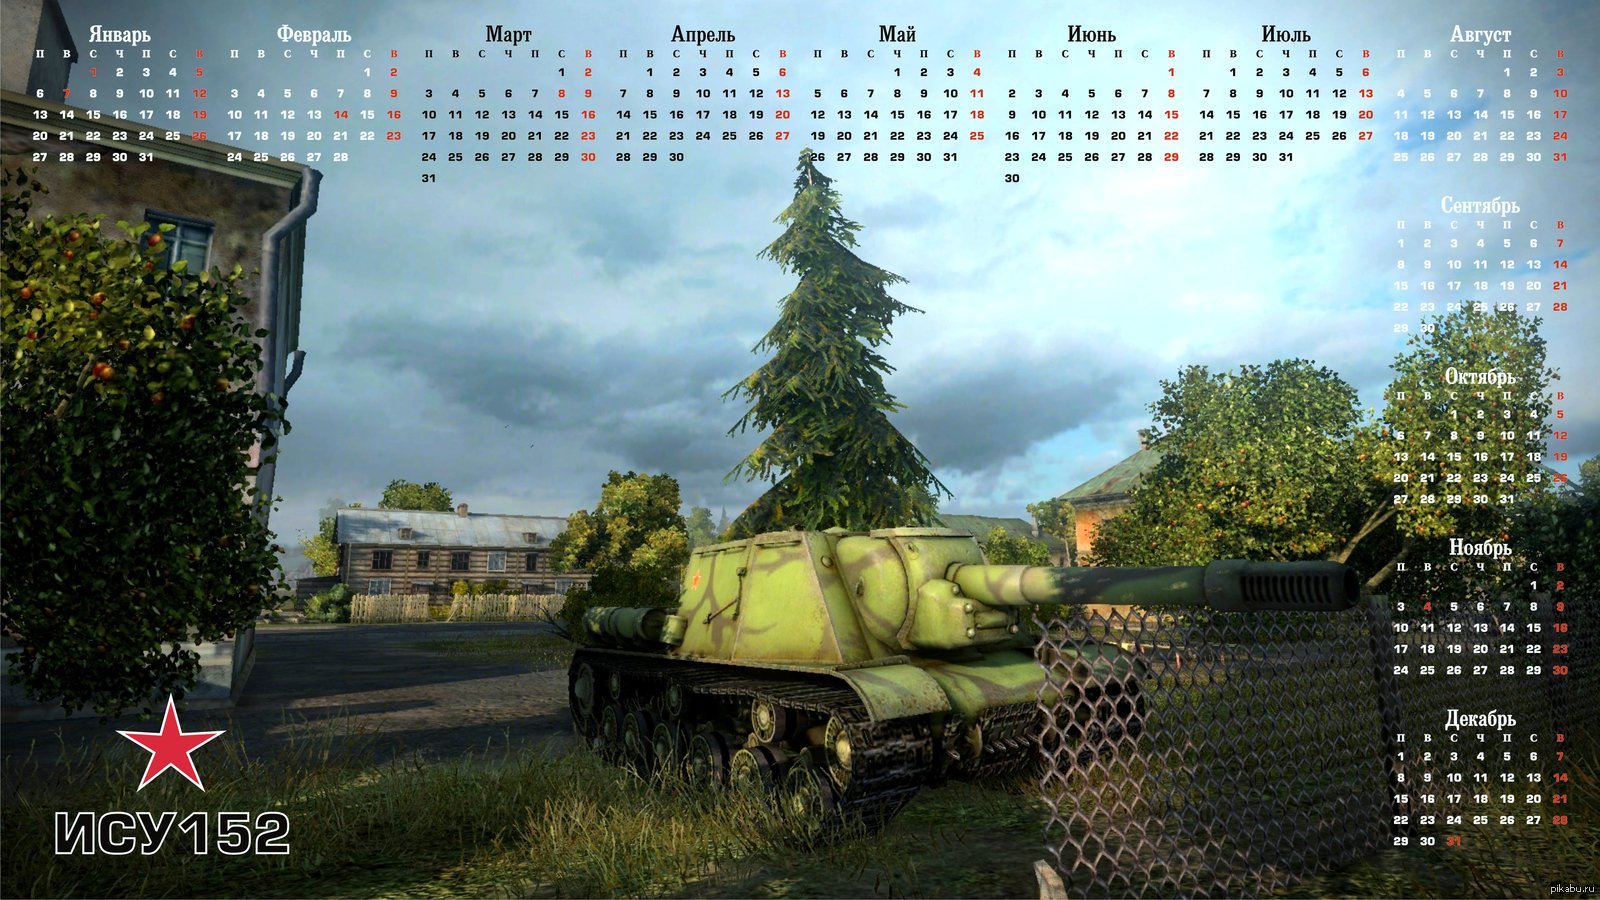 Календарь с танками. Календарь станки. Календарь мир танков. Календарь с изображением танка. Календарь на 2024 год танки